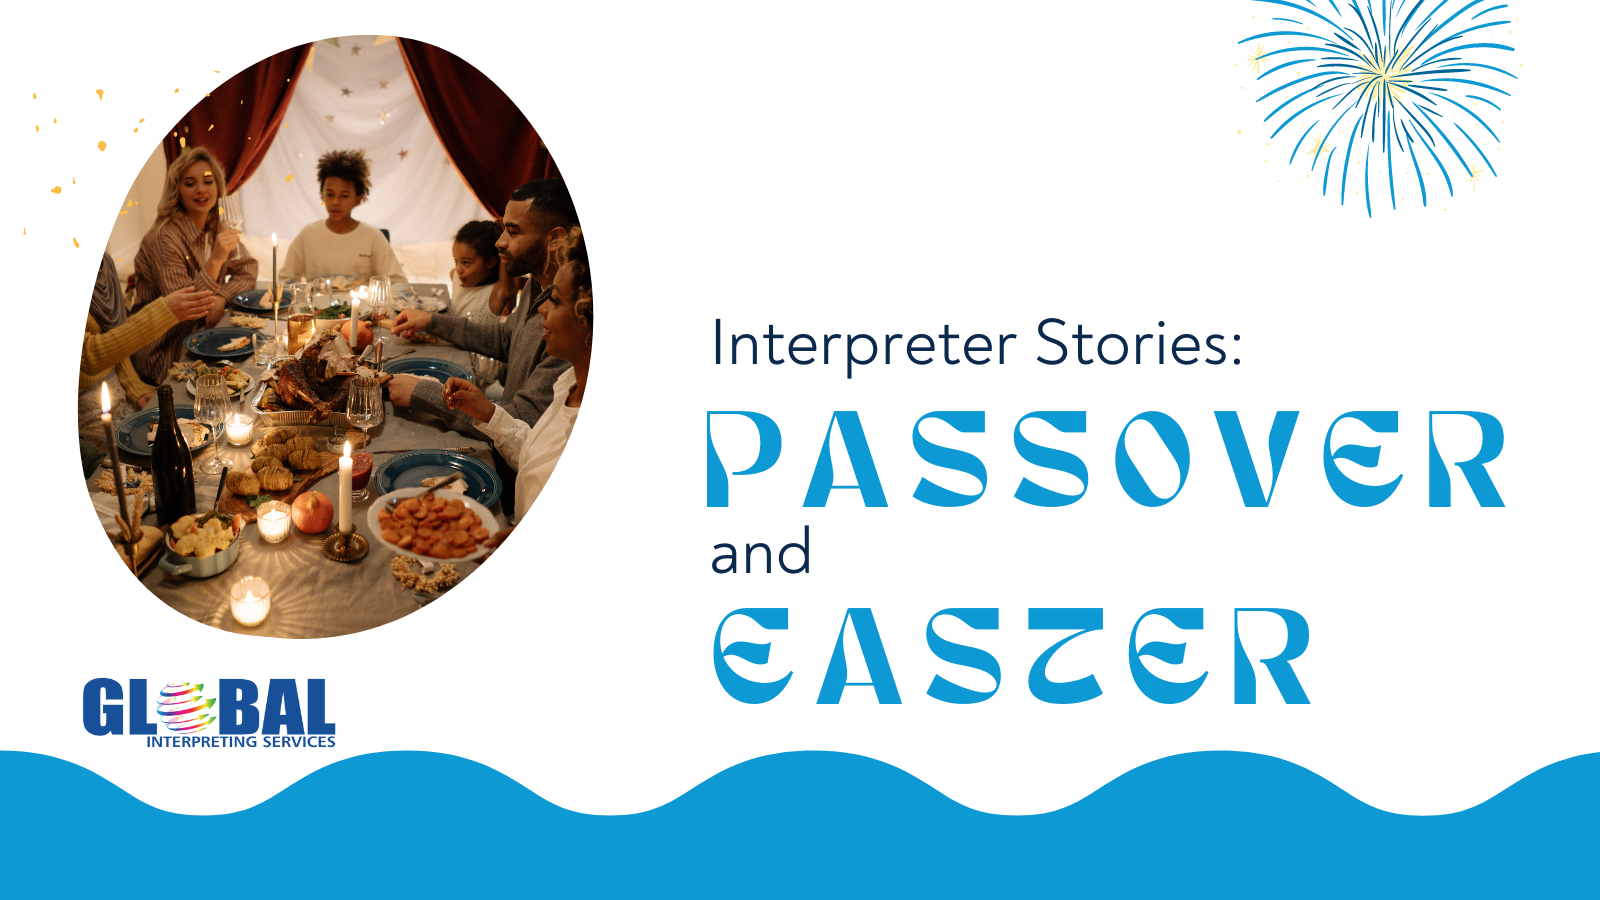 Interpreter Stories: Passover & Easter